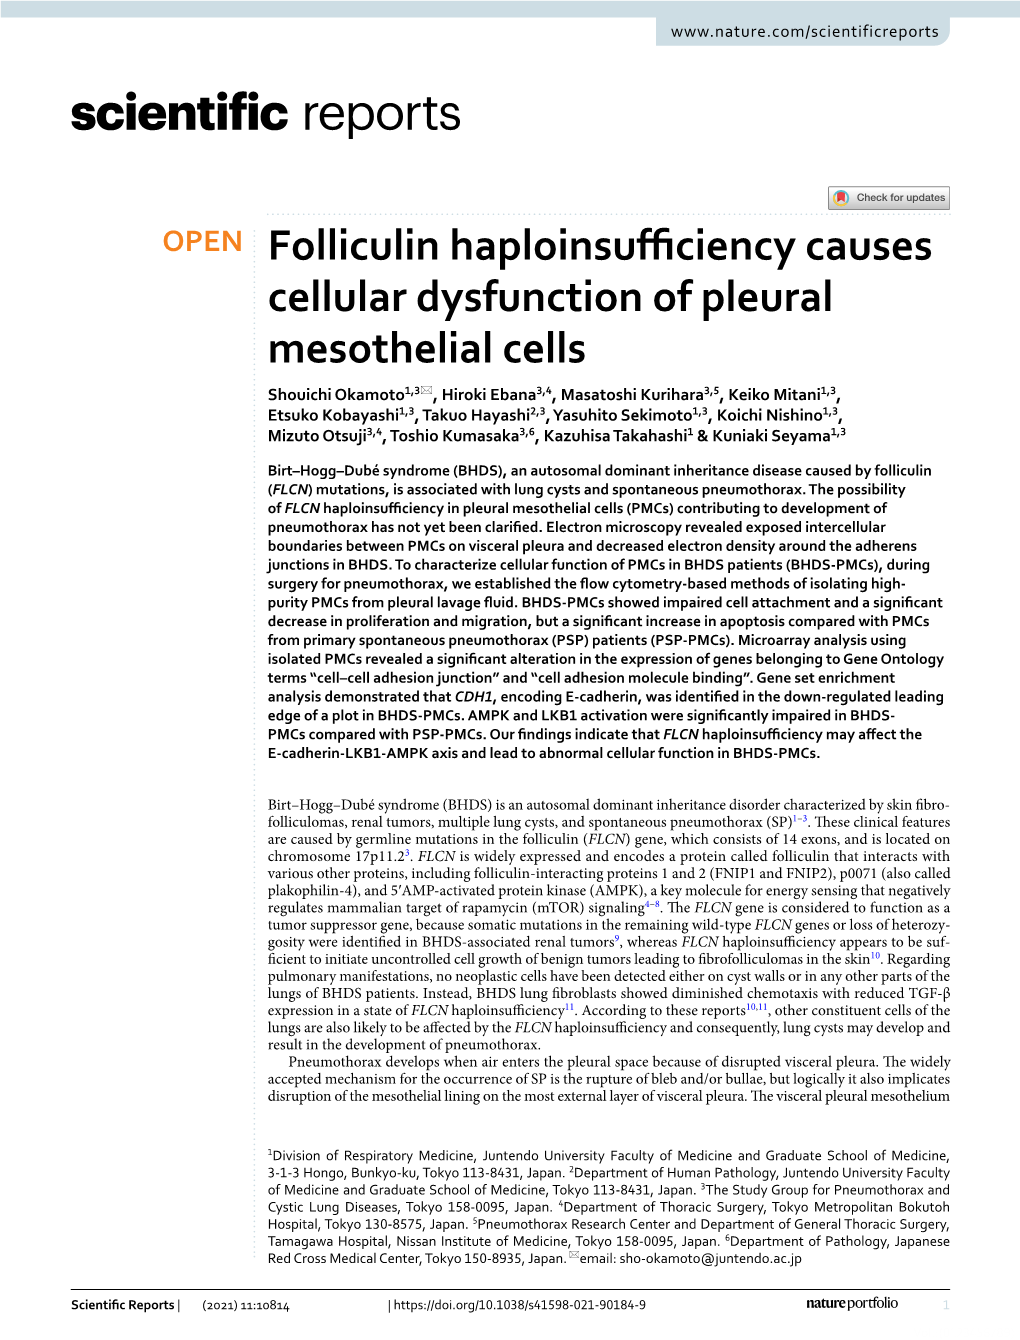 Folliculin Haploinsufficiency Causes Cellular Dysfunction of Pleural Mesothelial Cells